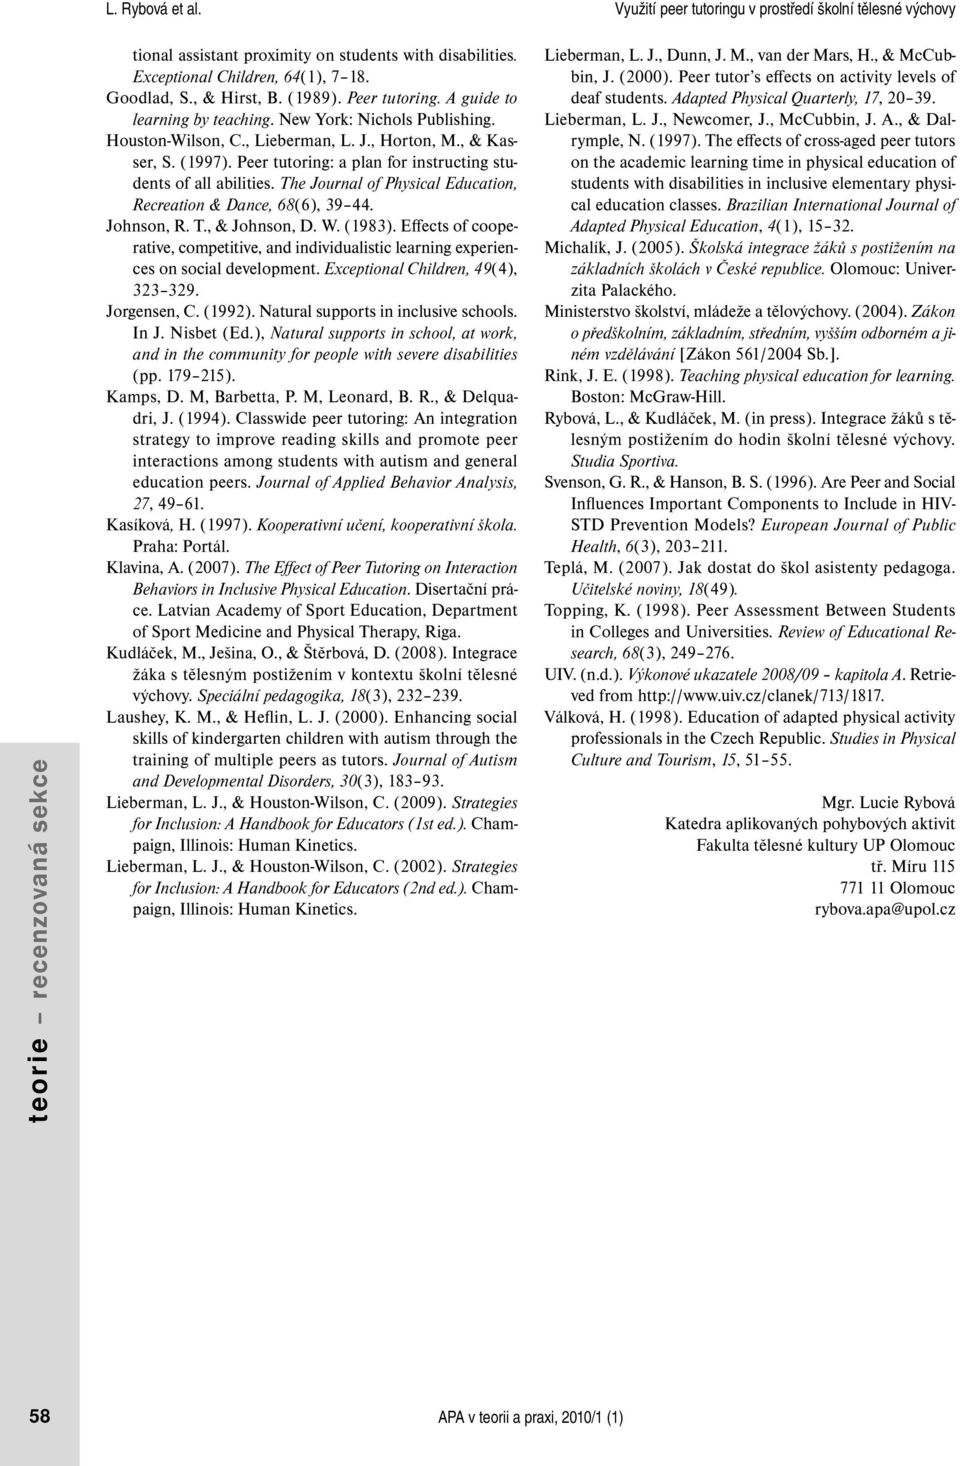 The Journal of Physical Education, Recreation & Dance, 68(6), 39 44. Johnson, R. T., & Johnson, D. W. (1983).